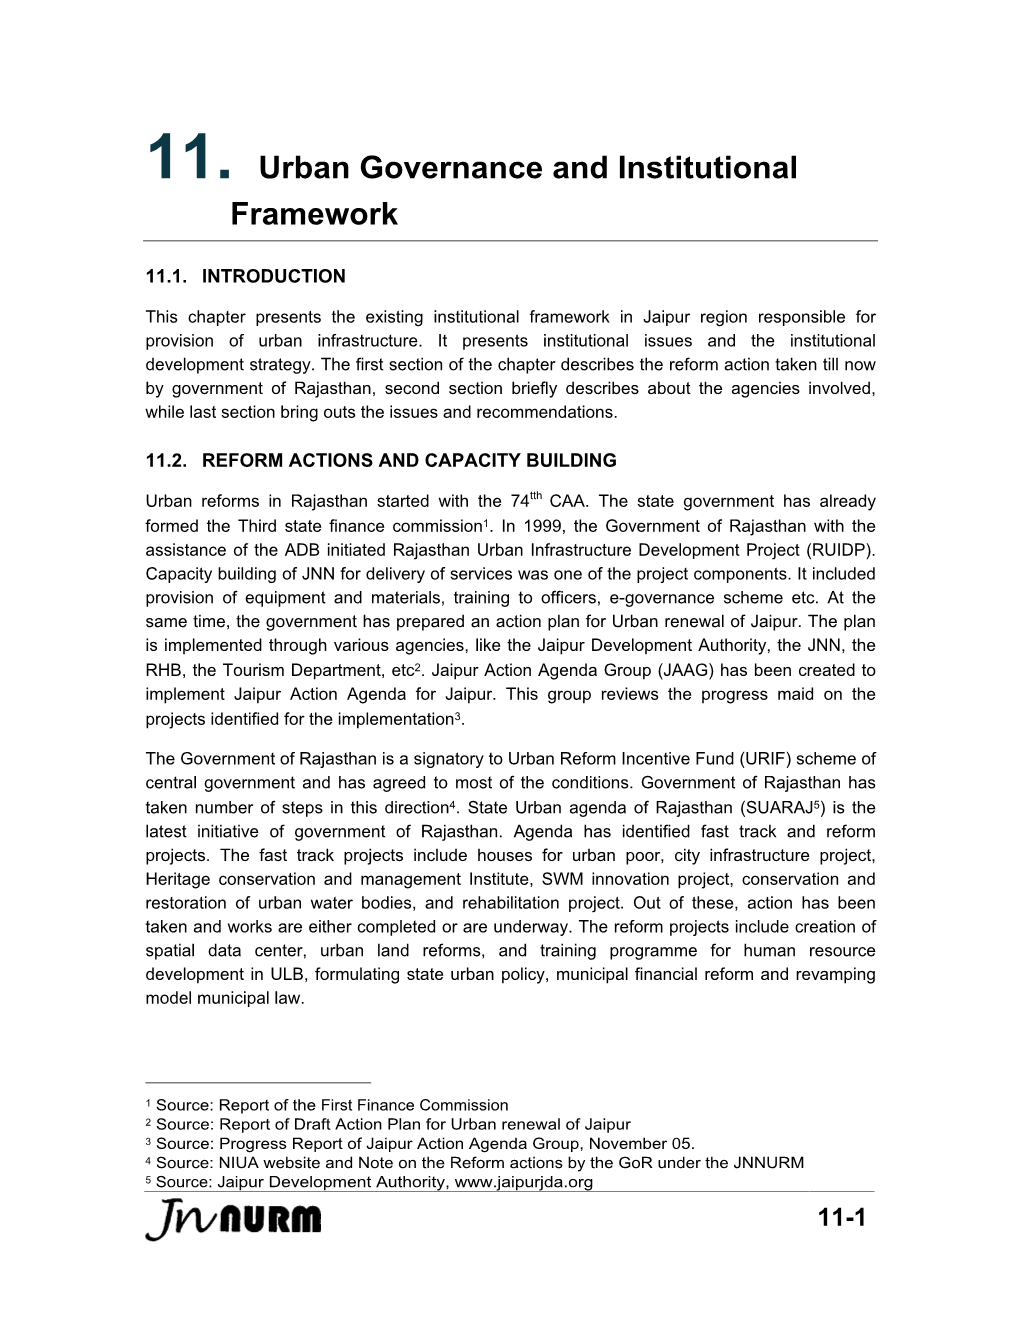 11. Urban Governance and Institutional Framework